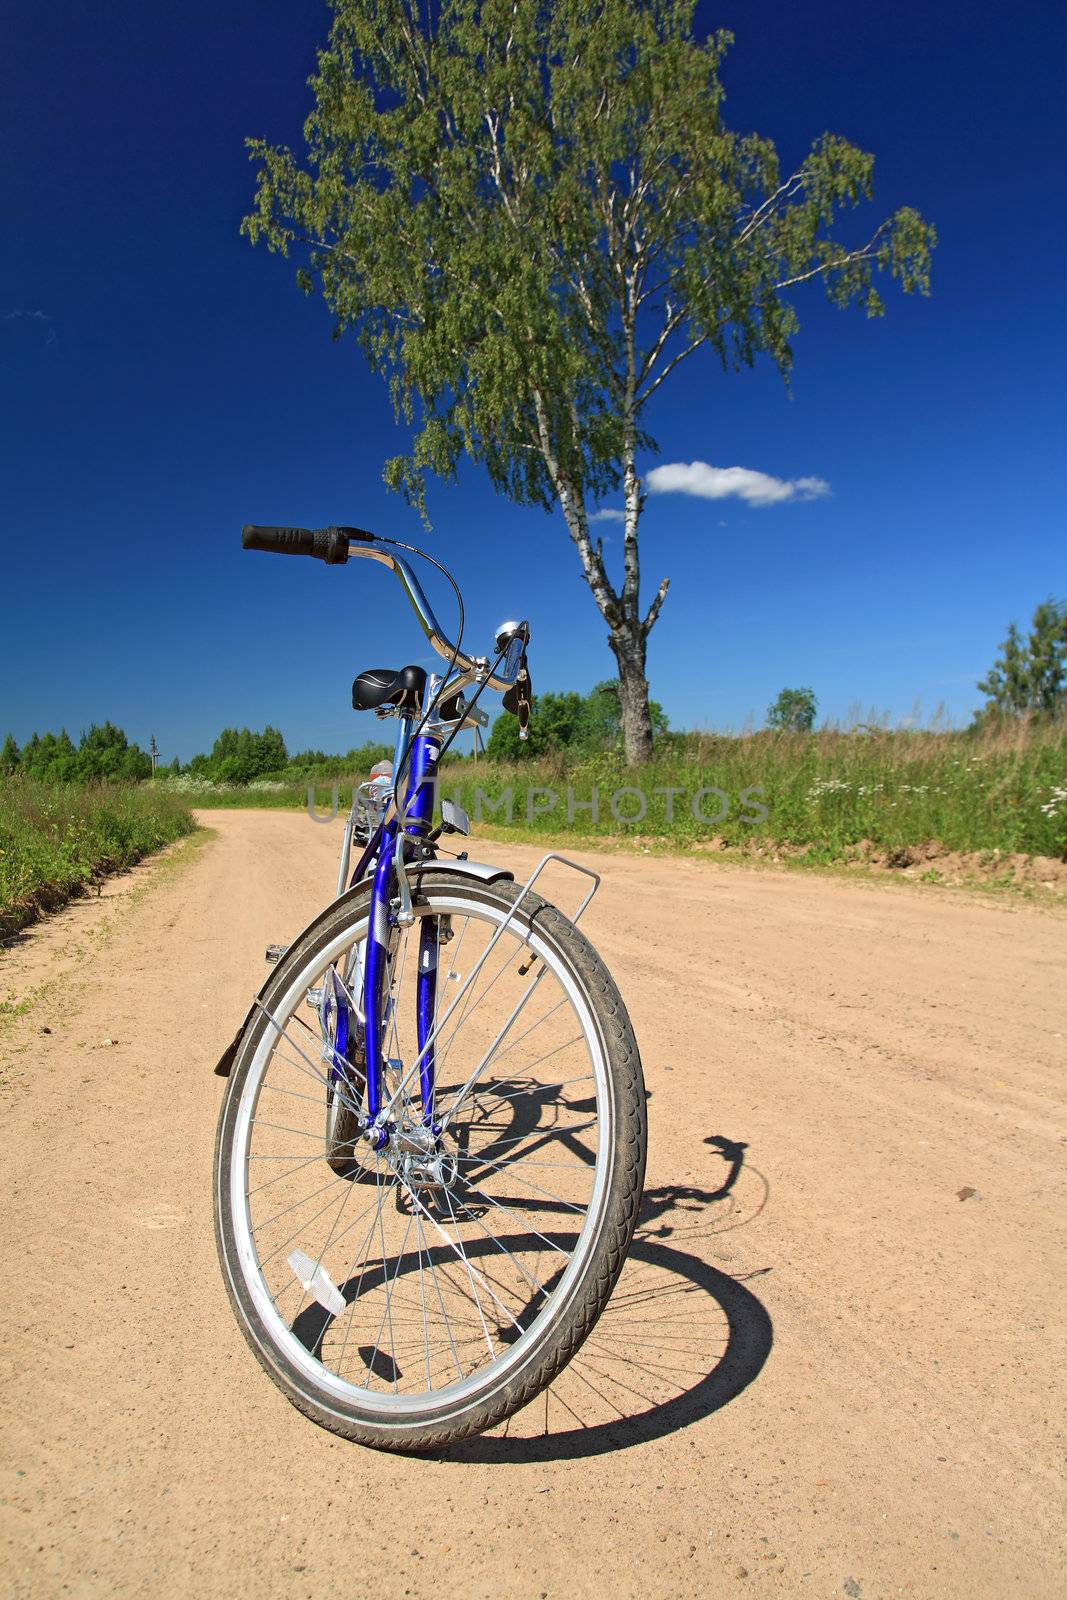 bicycle on sandy rural road by basel101658